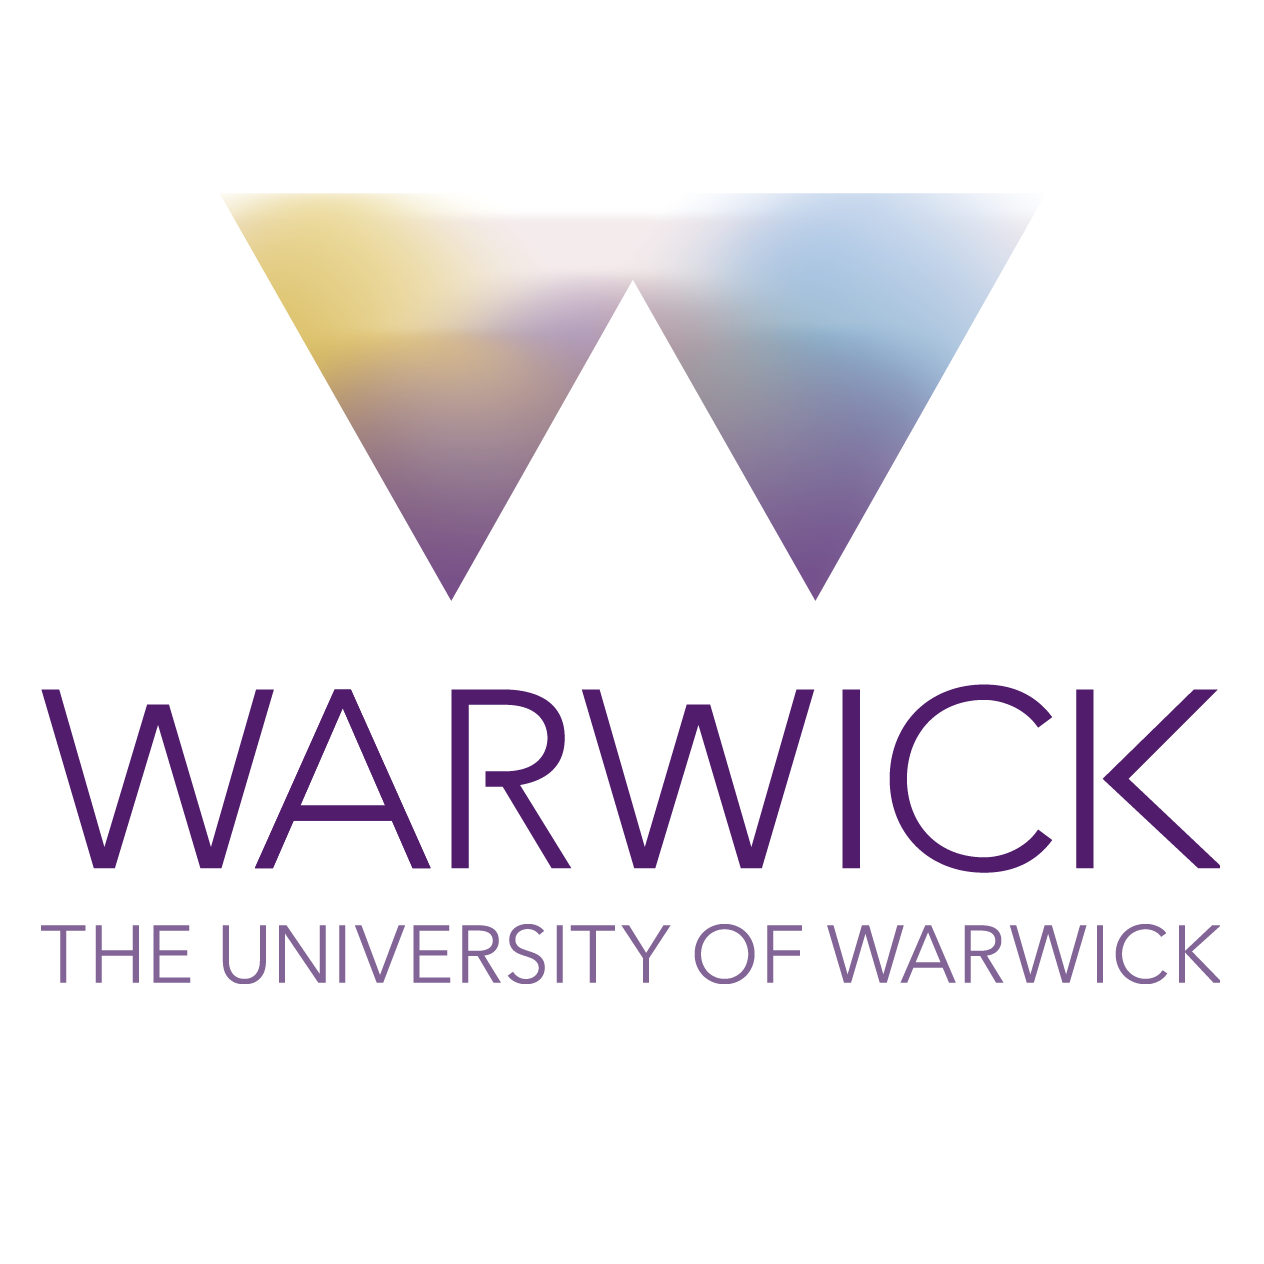 University Of Warwick Vierkant (1)